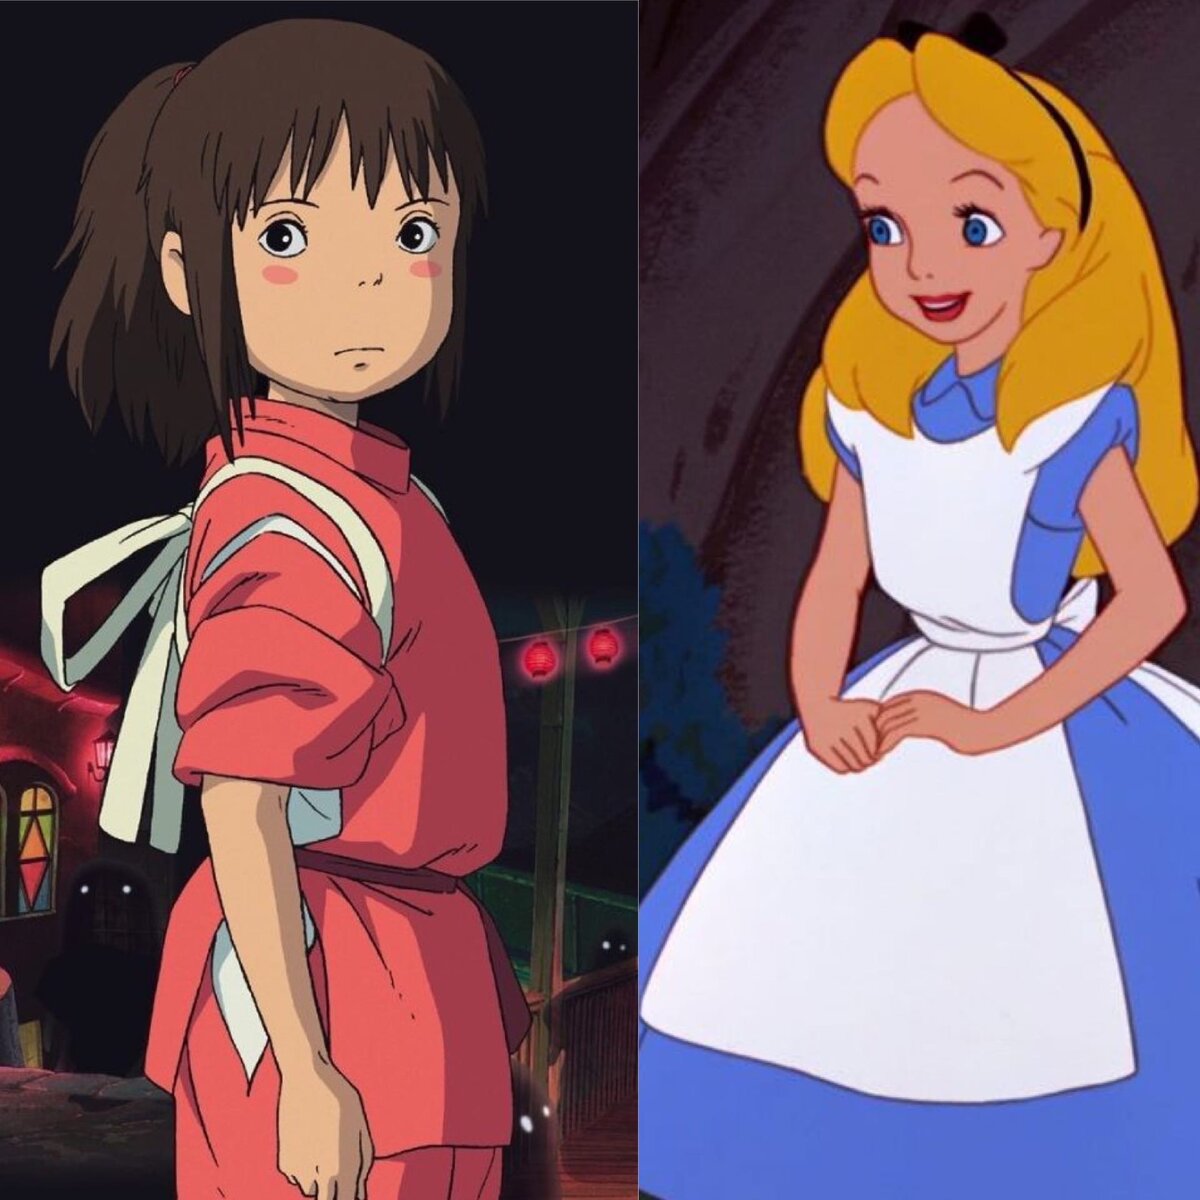 Тихиро и Алиса из мультфильма "Алиса в стране чудес"